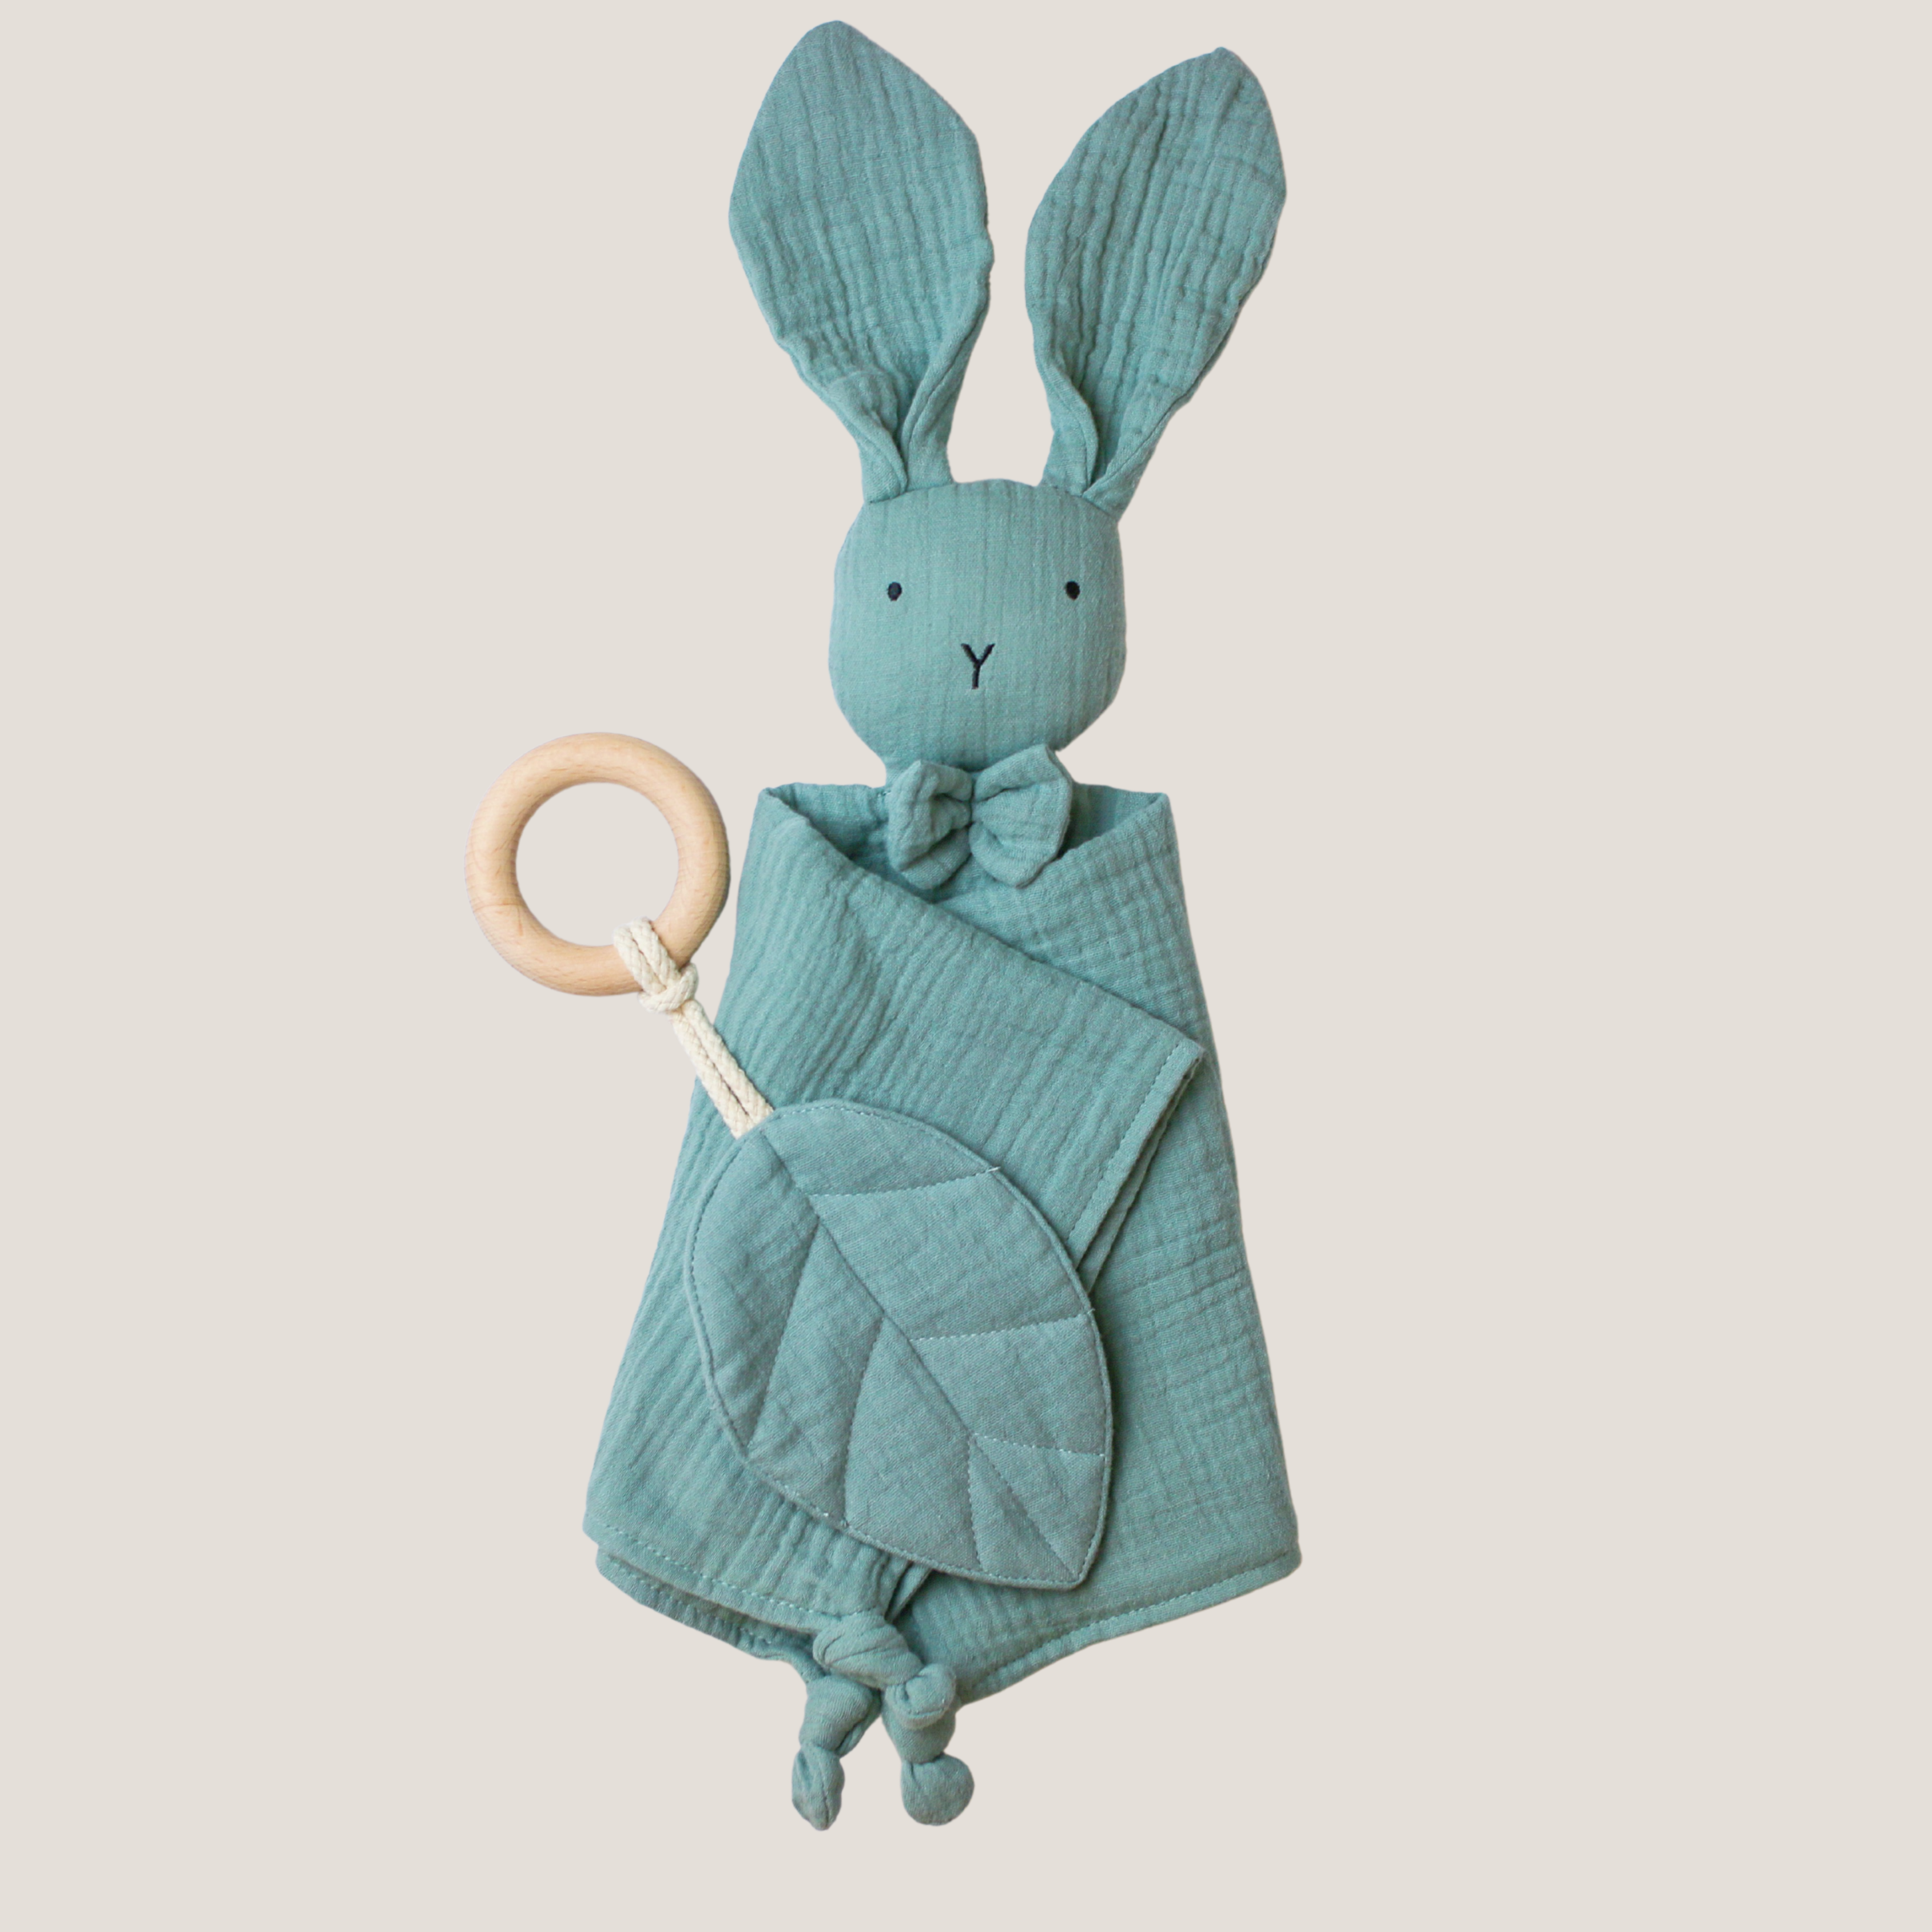 Snuggly Bunny Comforter & Ring Leaf Teether Bundle in Sage